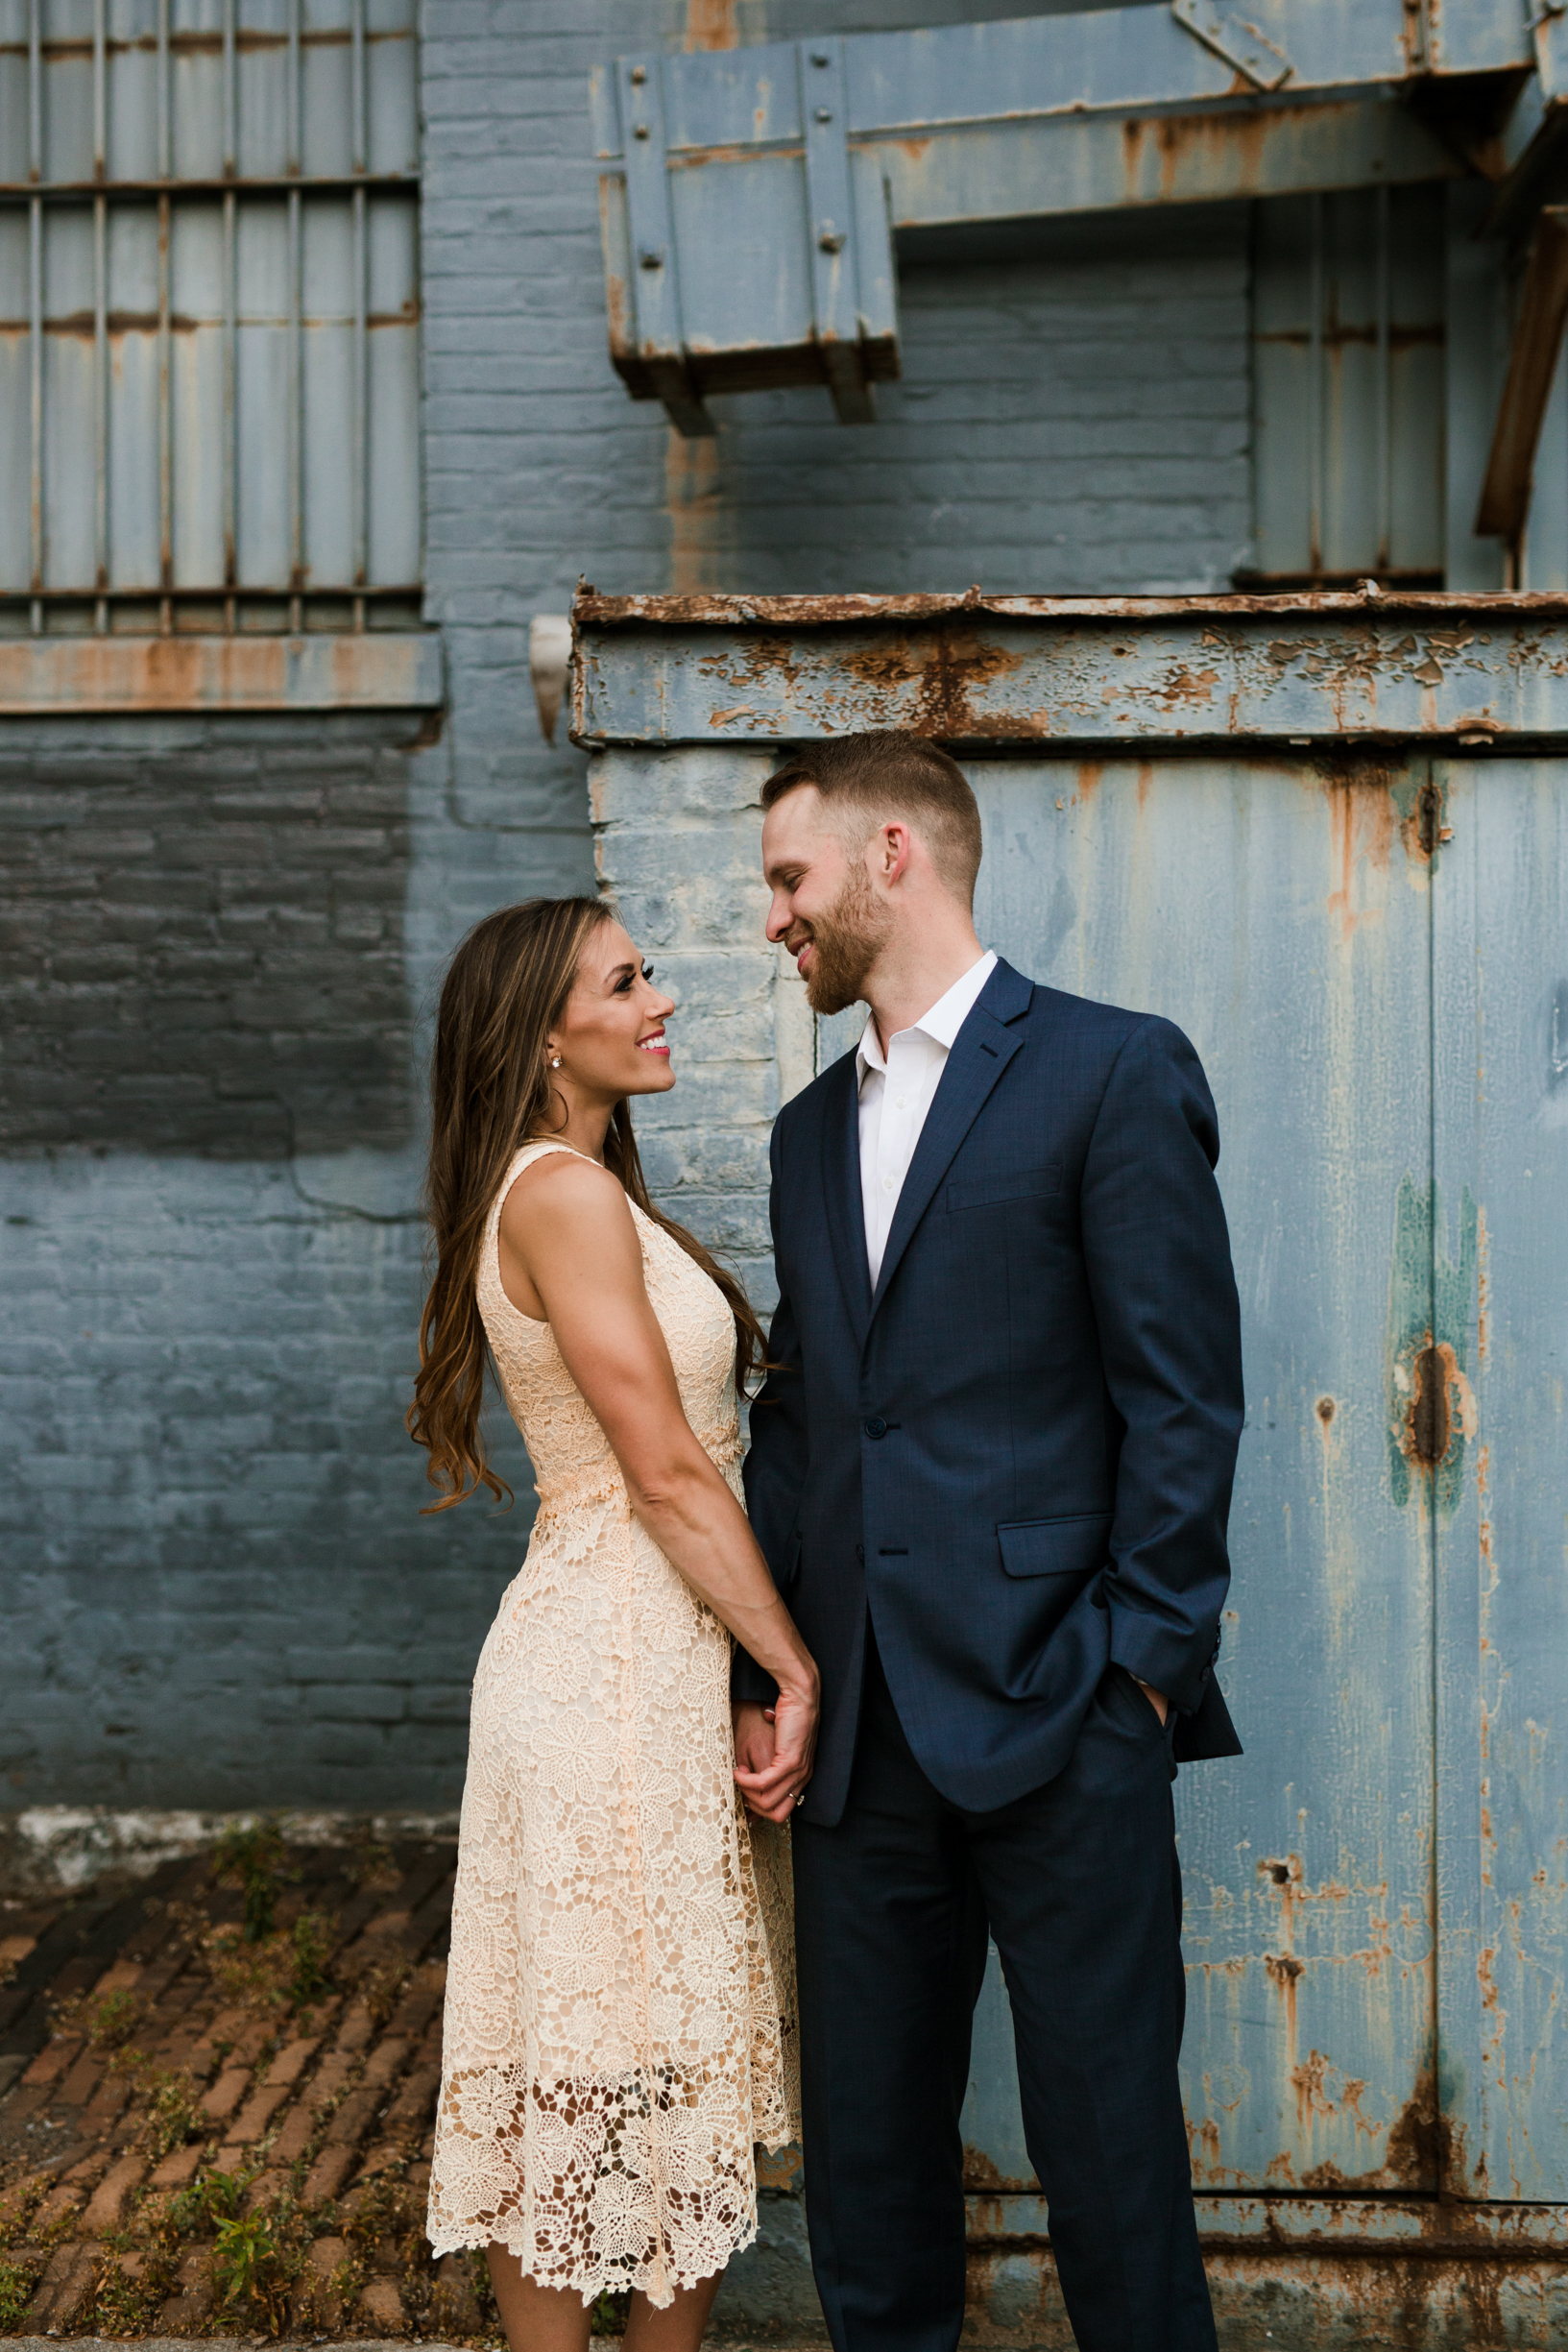 Victoria & Chad Engagement 2018 Crystal Ludwick Photo Louisville Kentucky Wedding Photographer WEBSITE (37 of 48).jpg